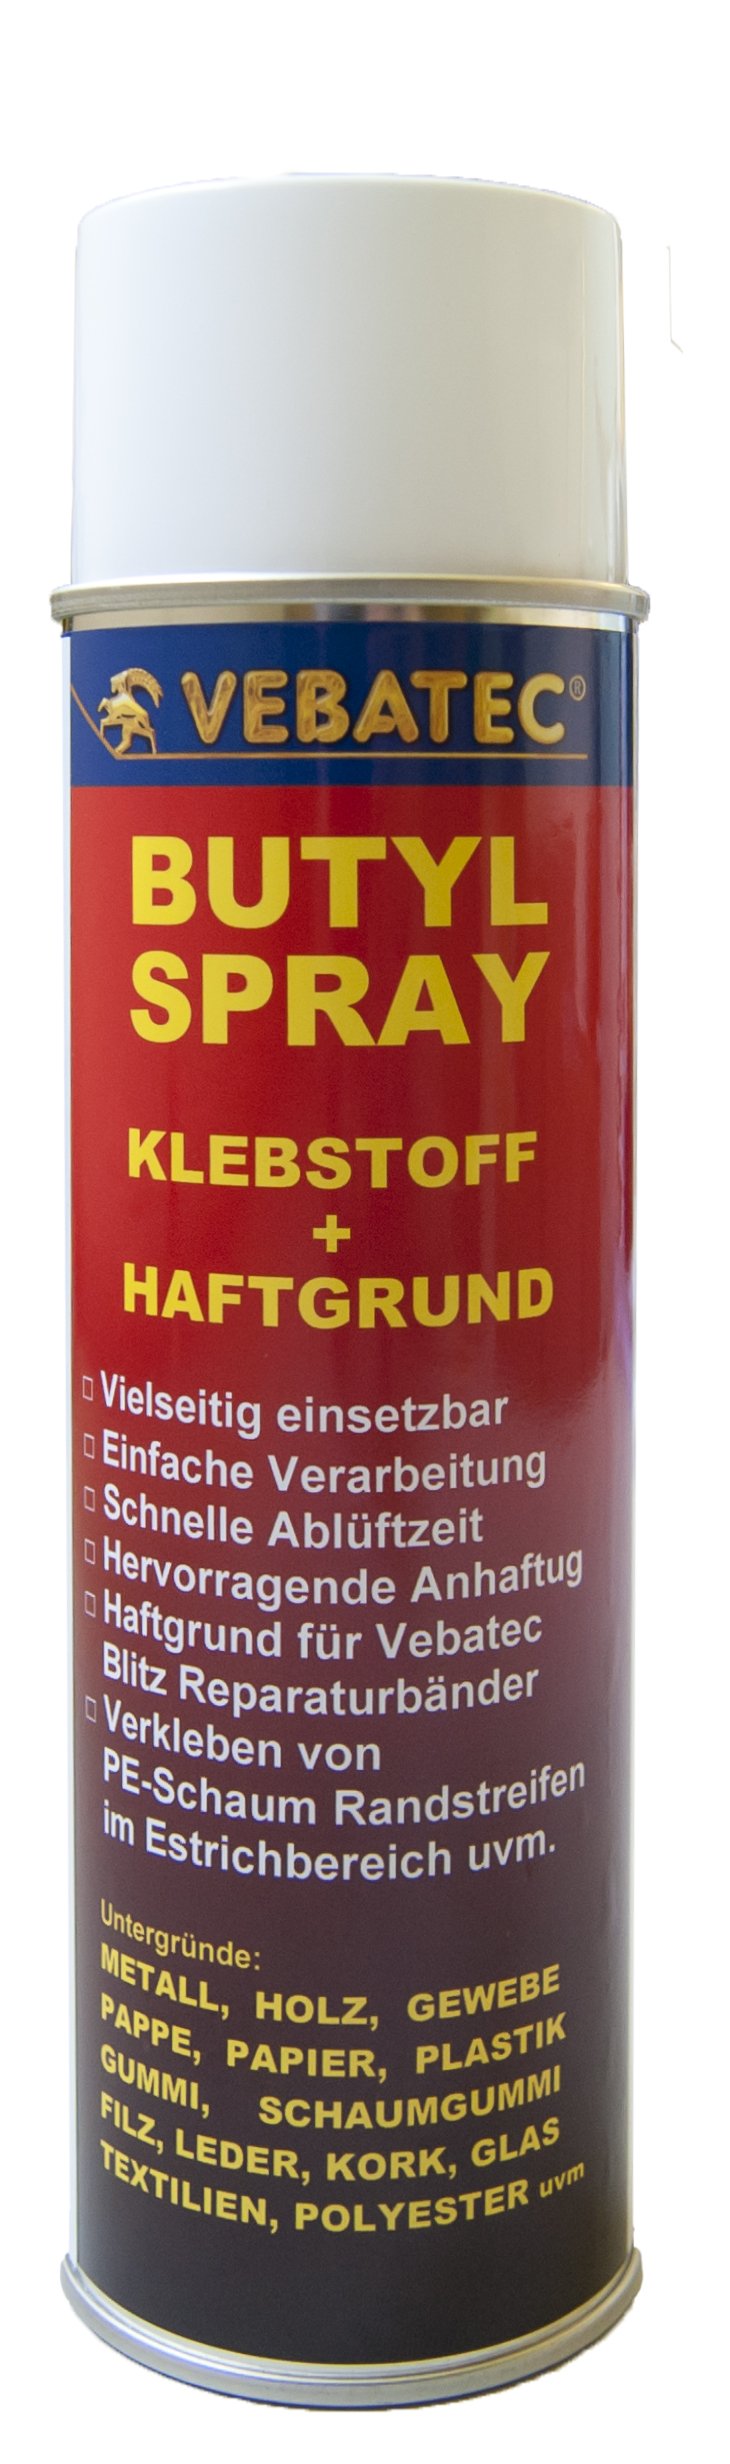 Vebatec - Klebstoff Butyl Spray 500 ml